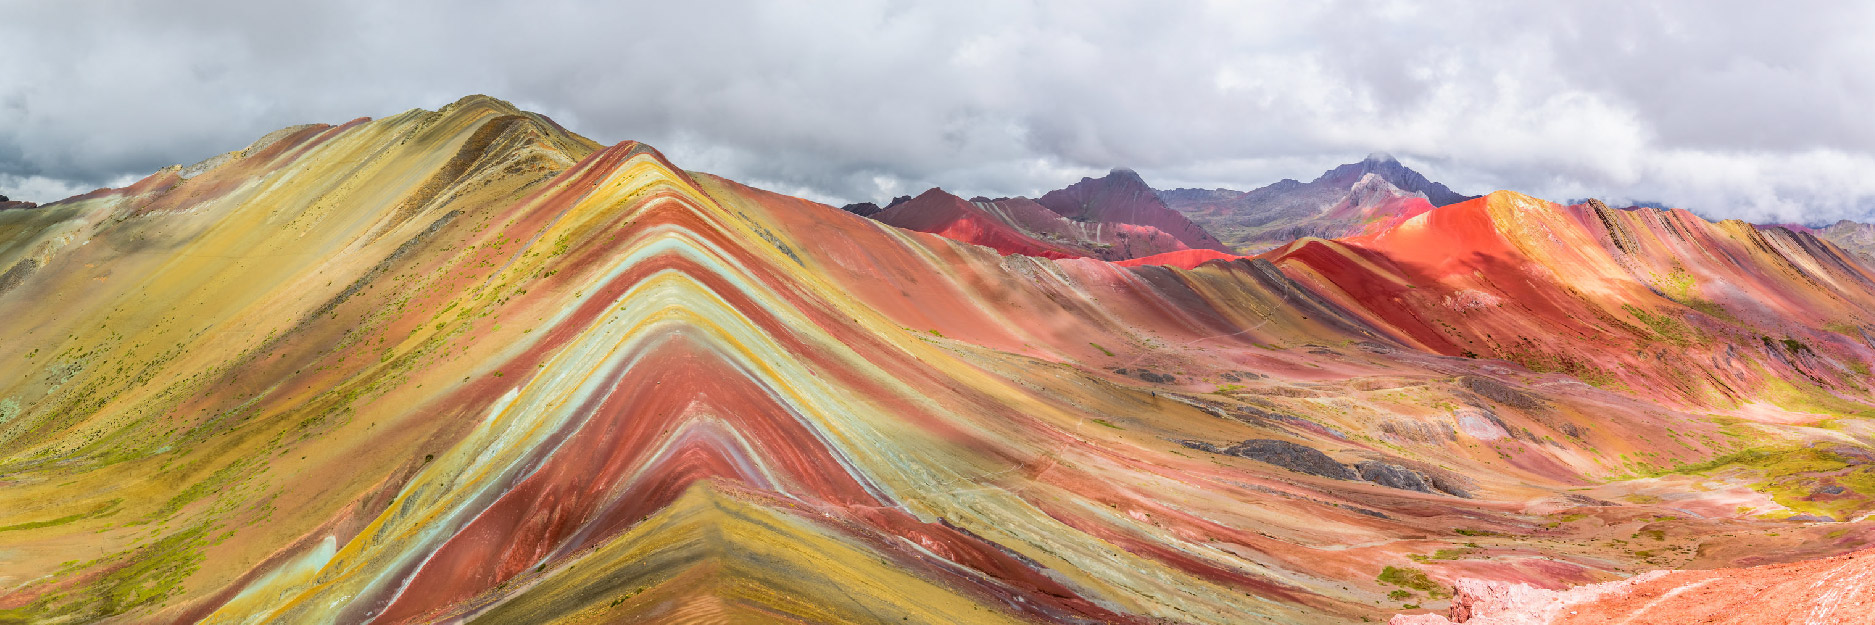 Peru Rainbow mountains